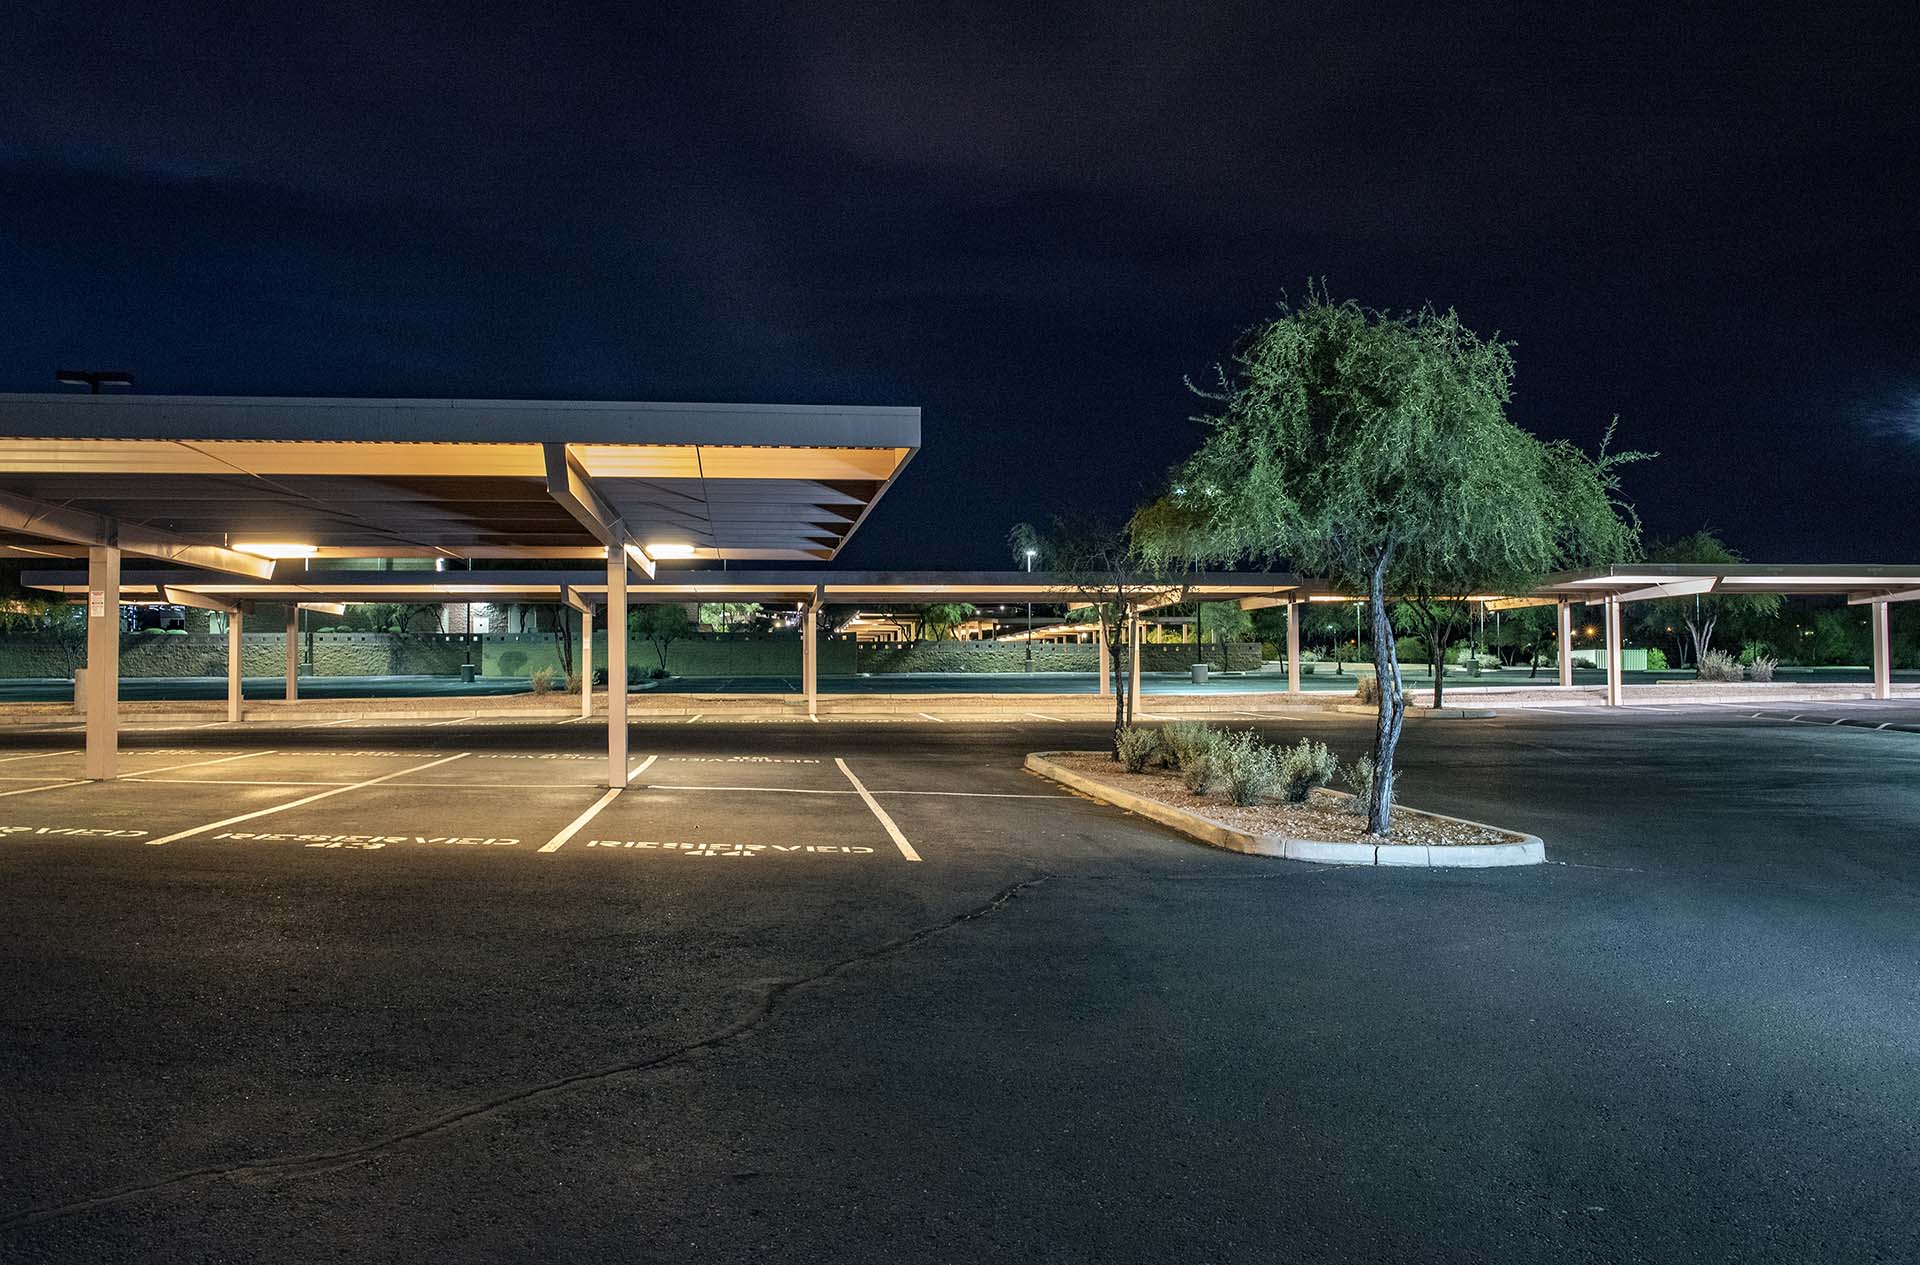 Parking Lot, Tempe, Arizona